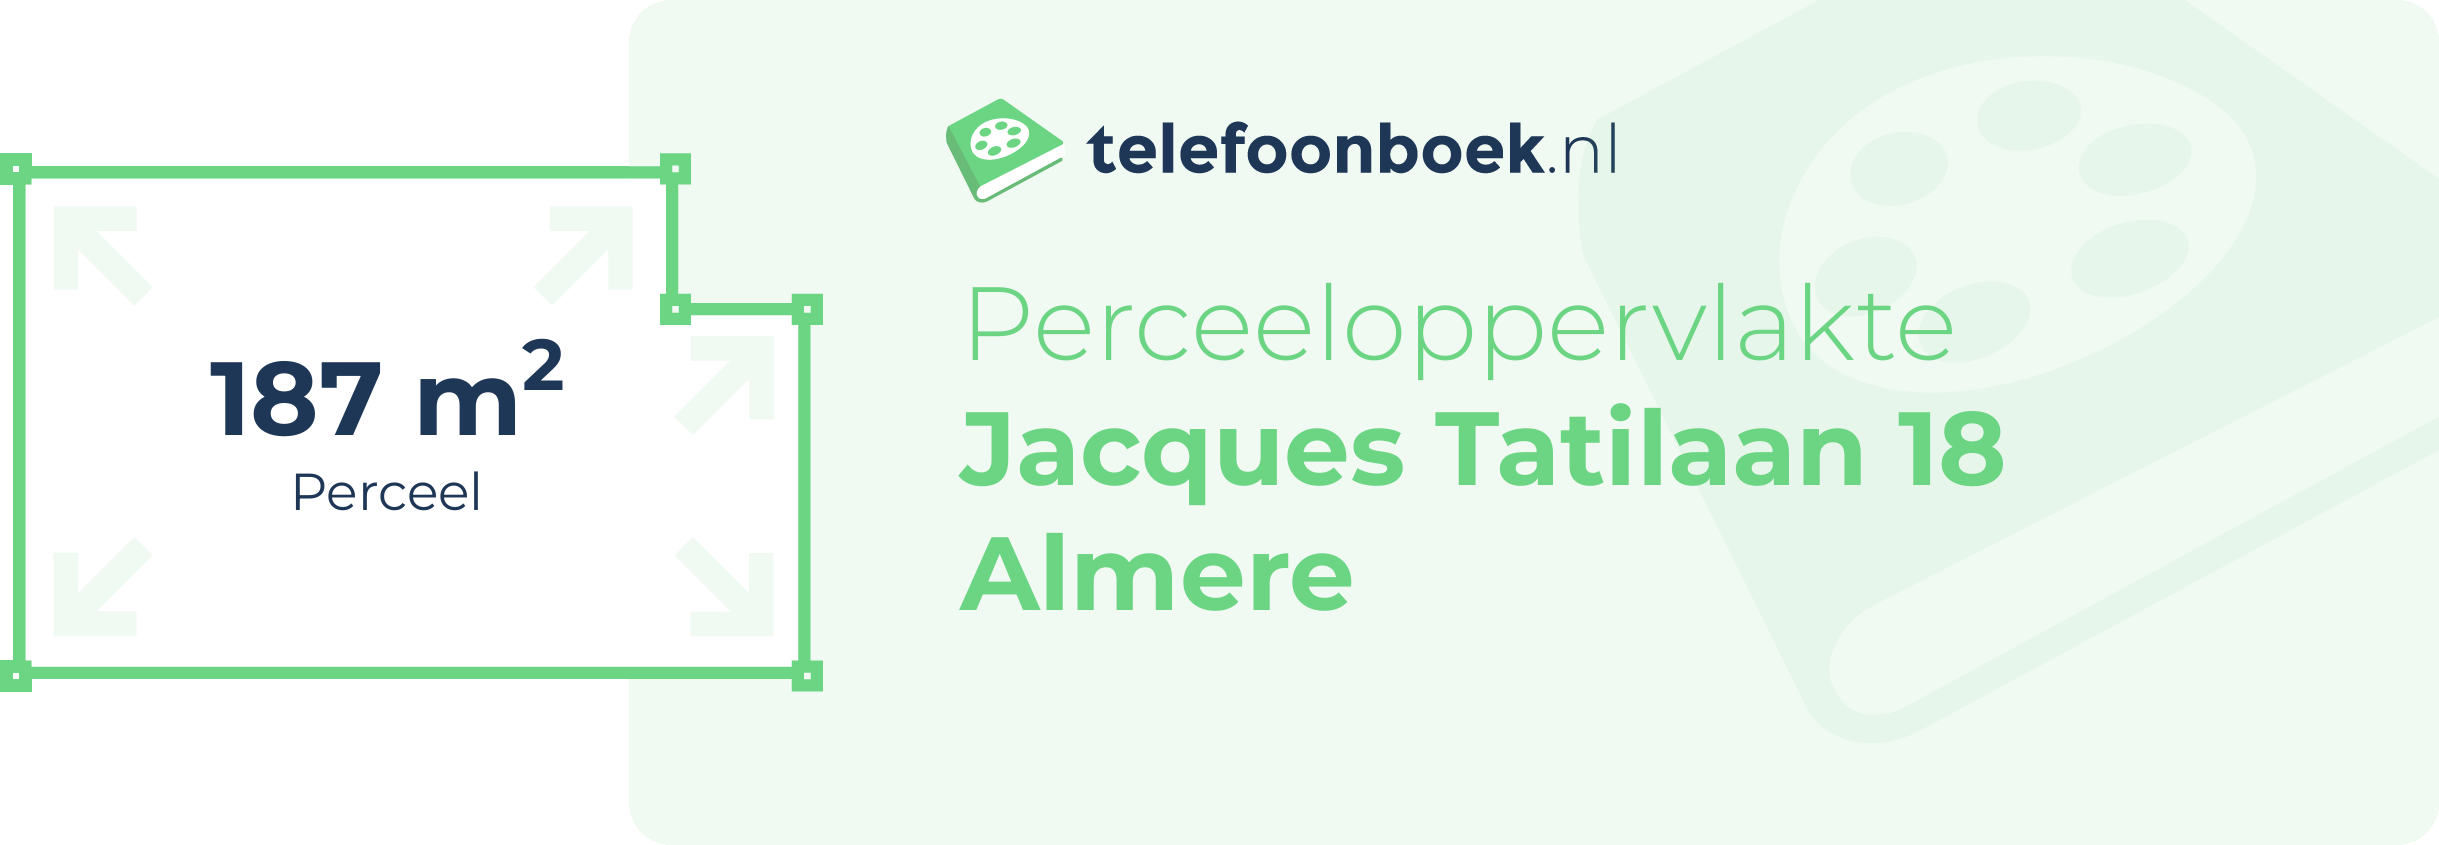 Perceeloppervlakte Jacques Tatilaan 18 Almere